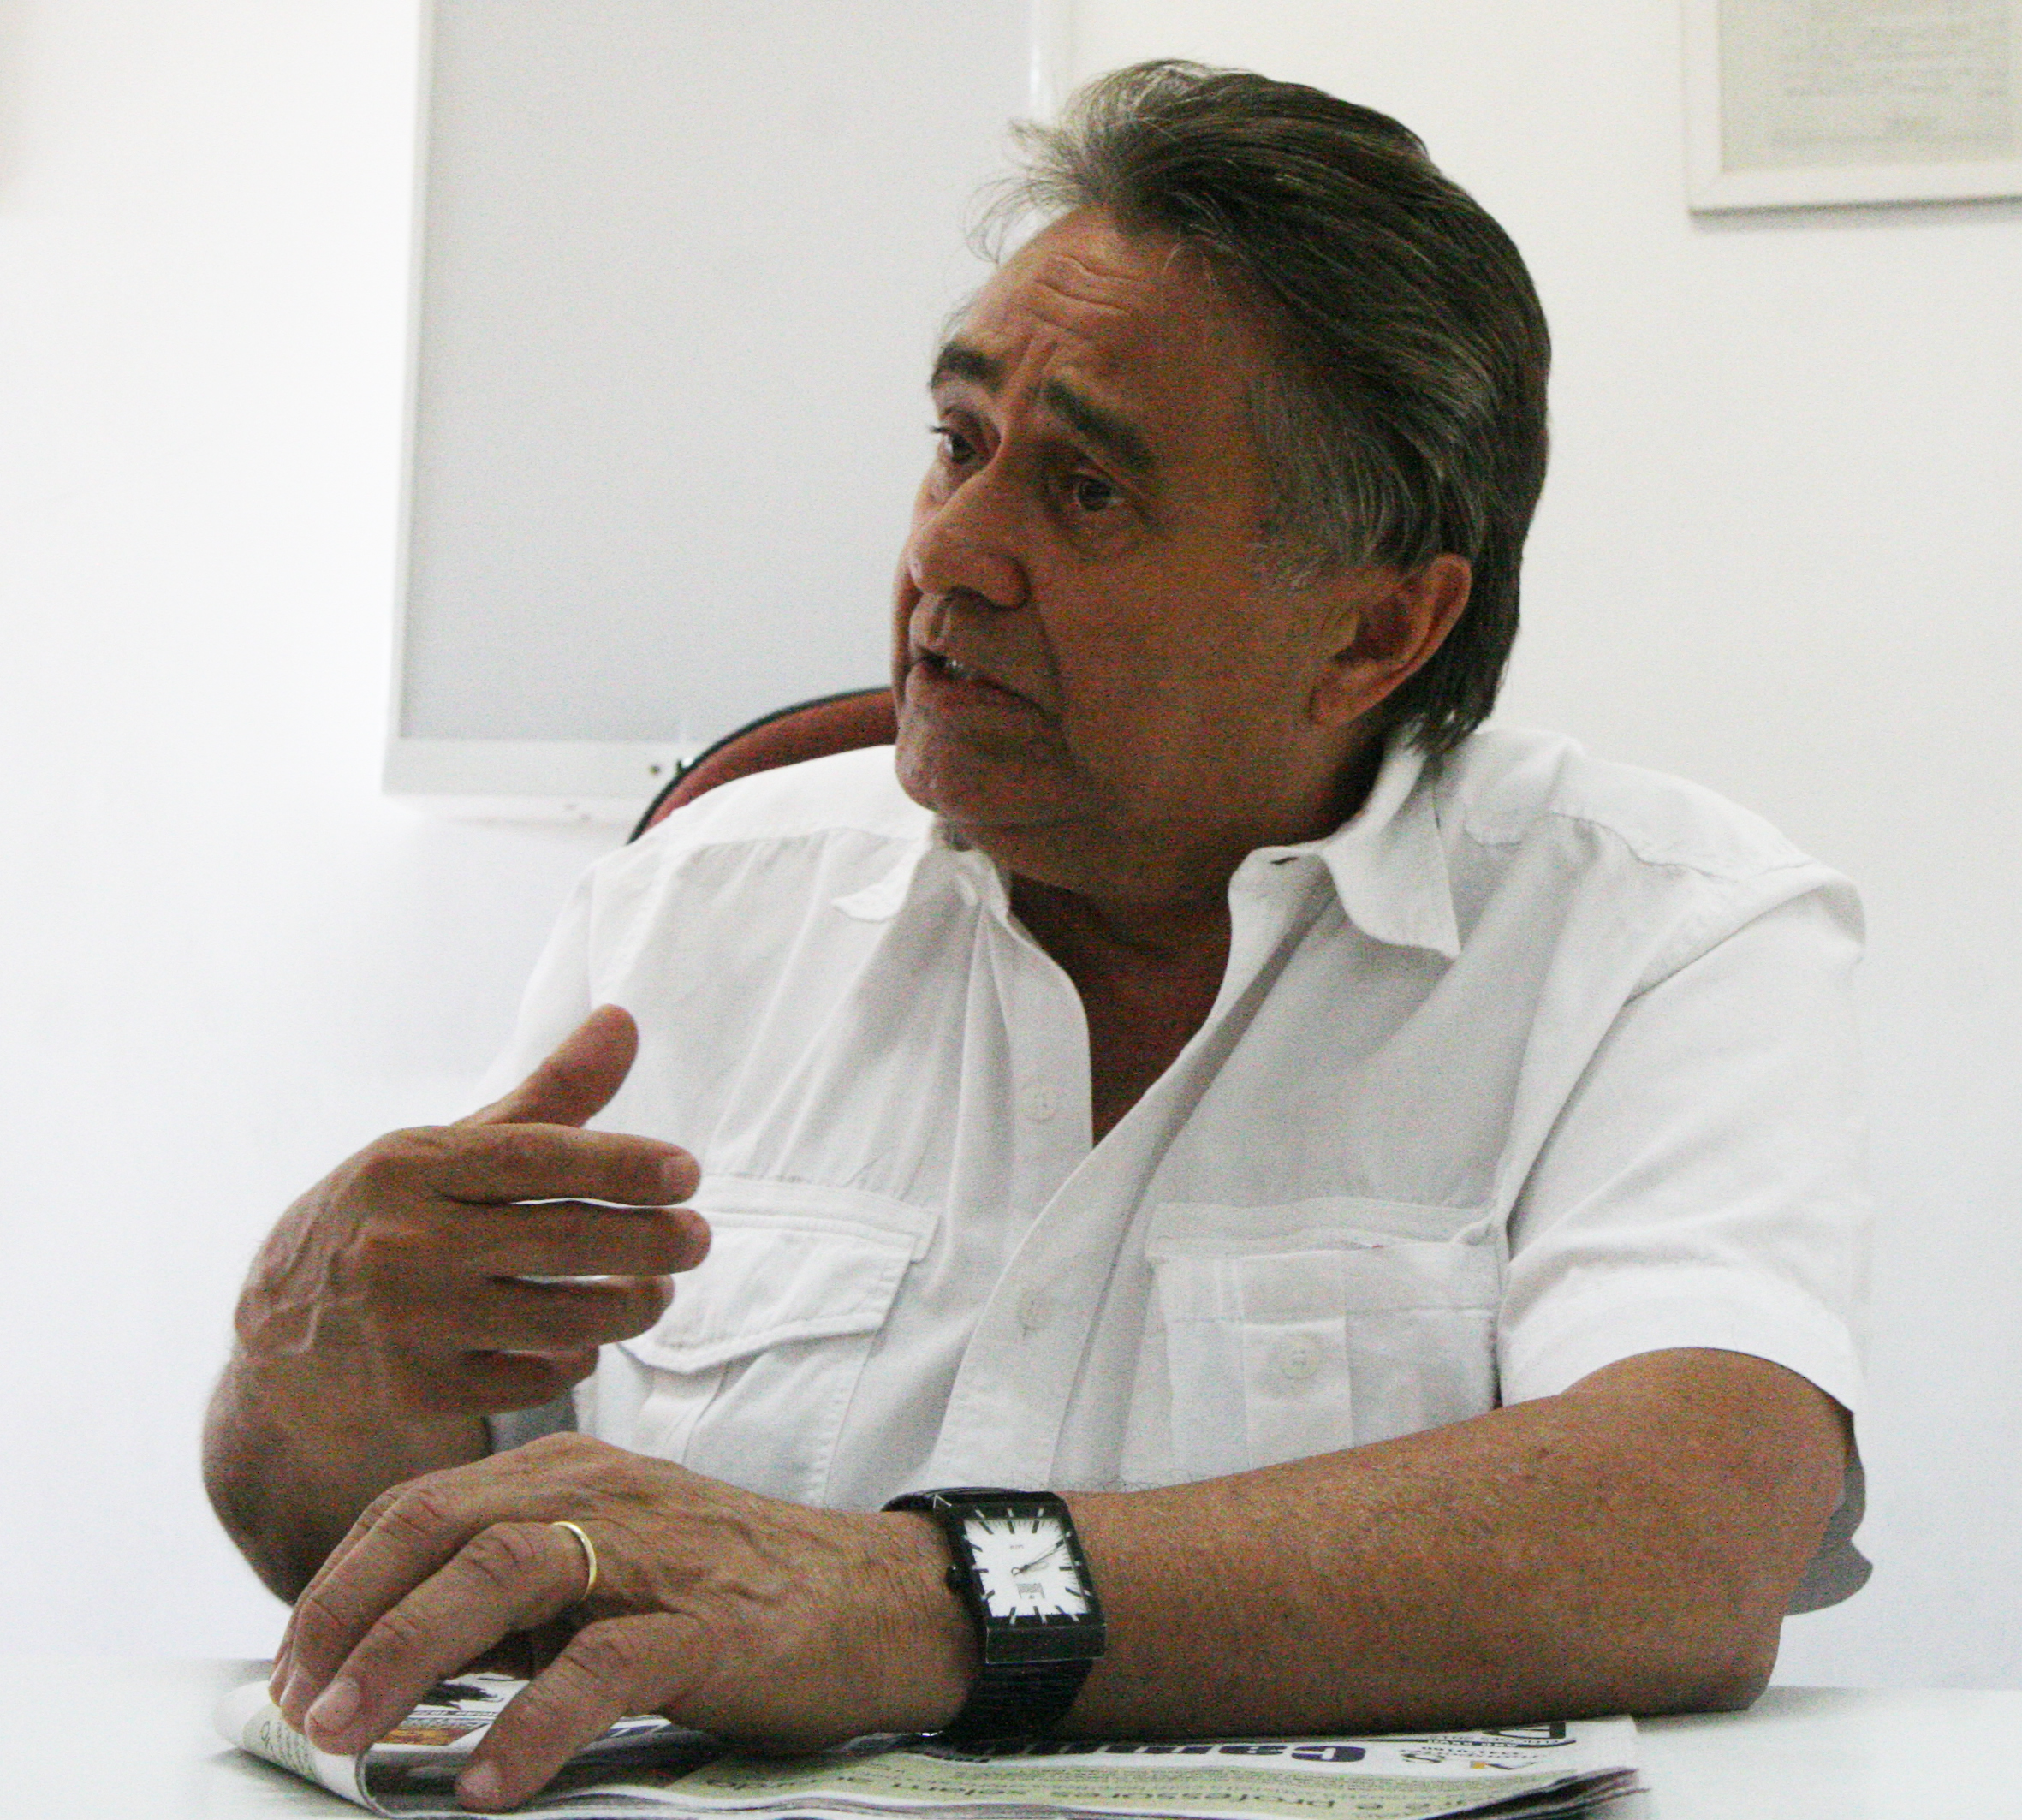 O médico e vereador Antonio Cruz: “Sempre tive como foco a assistência social, a solidariedade”